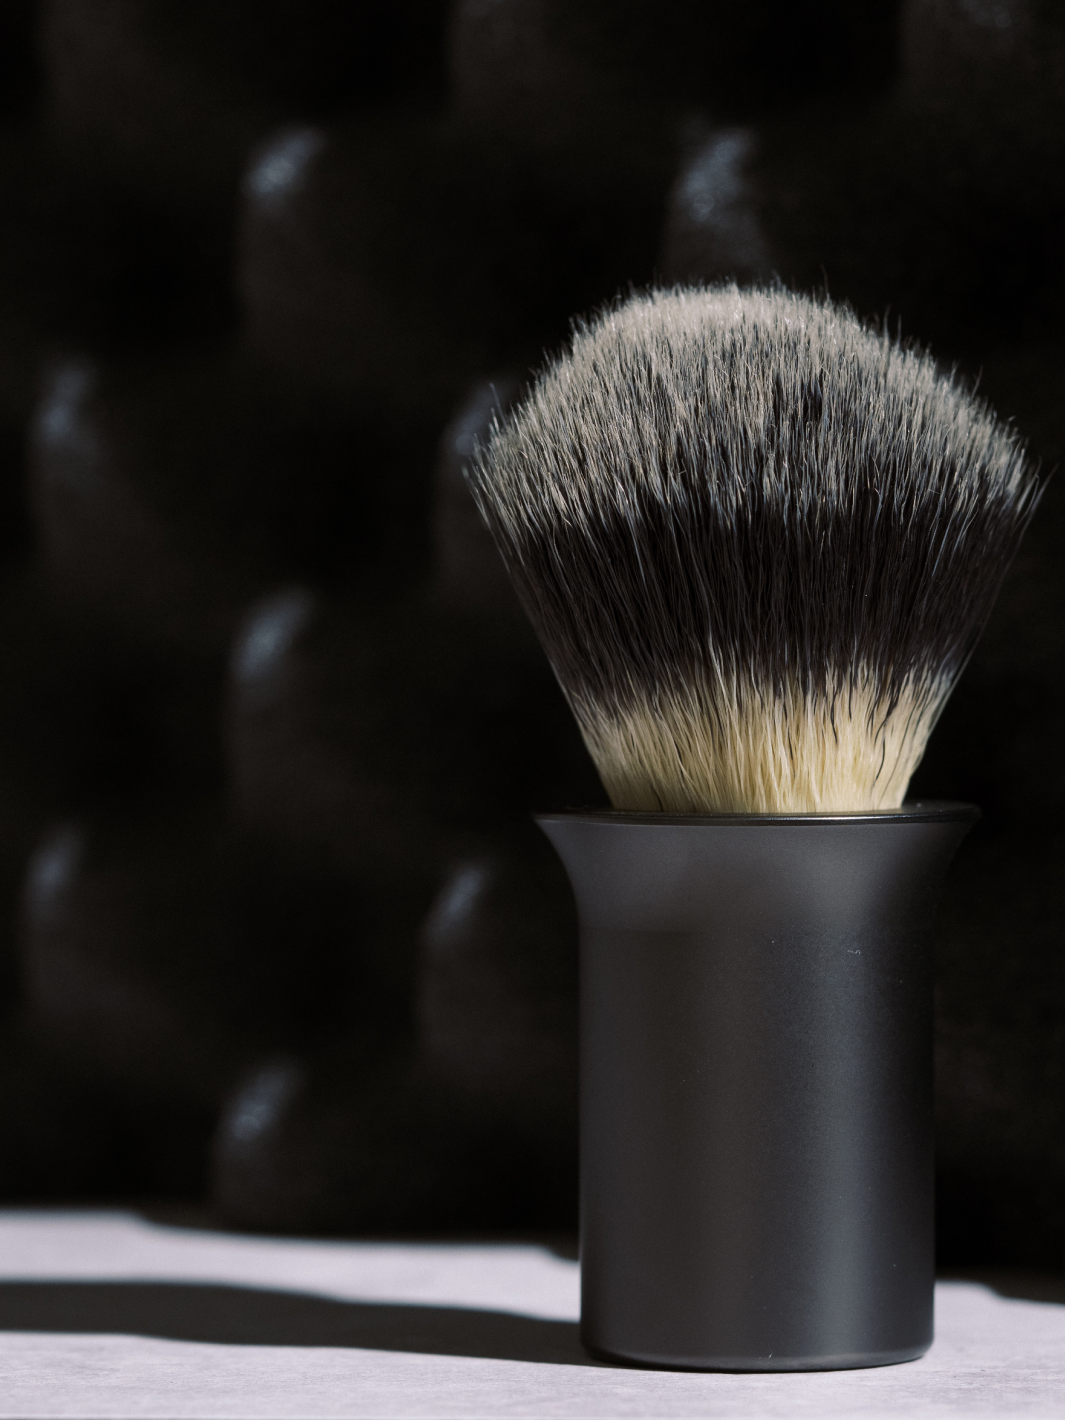 Herravörur - Silvertip Synthetic Shaving Brush